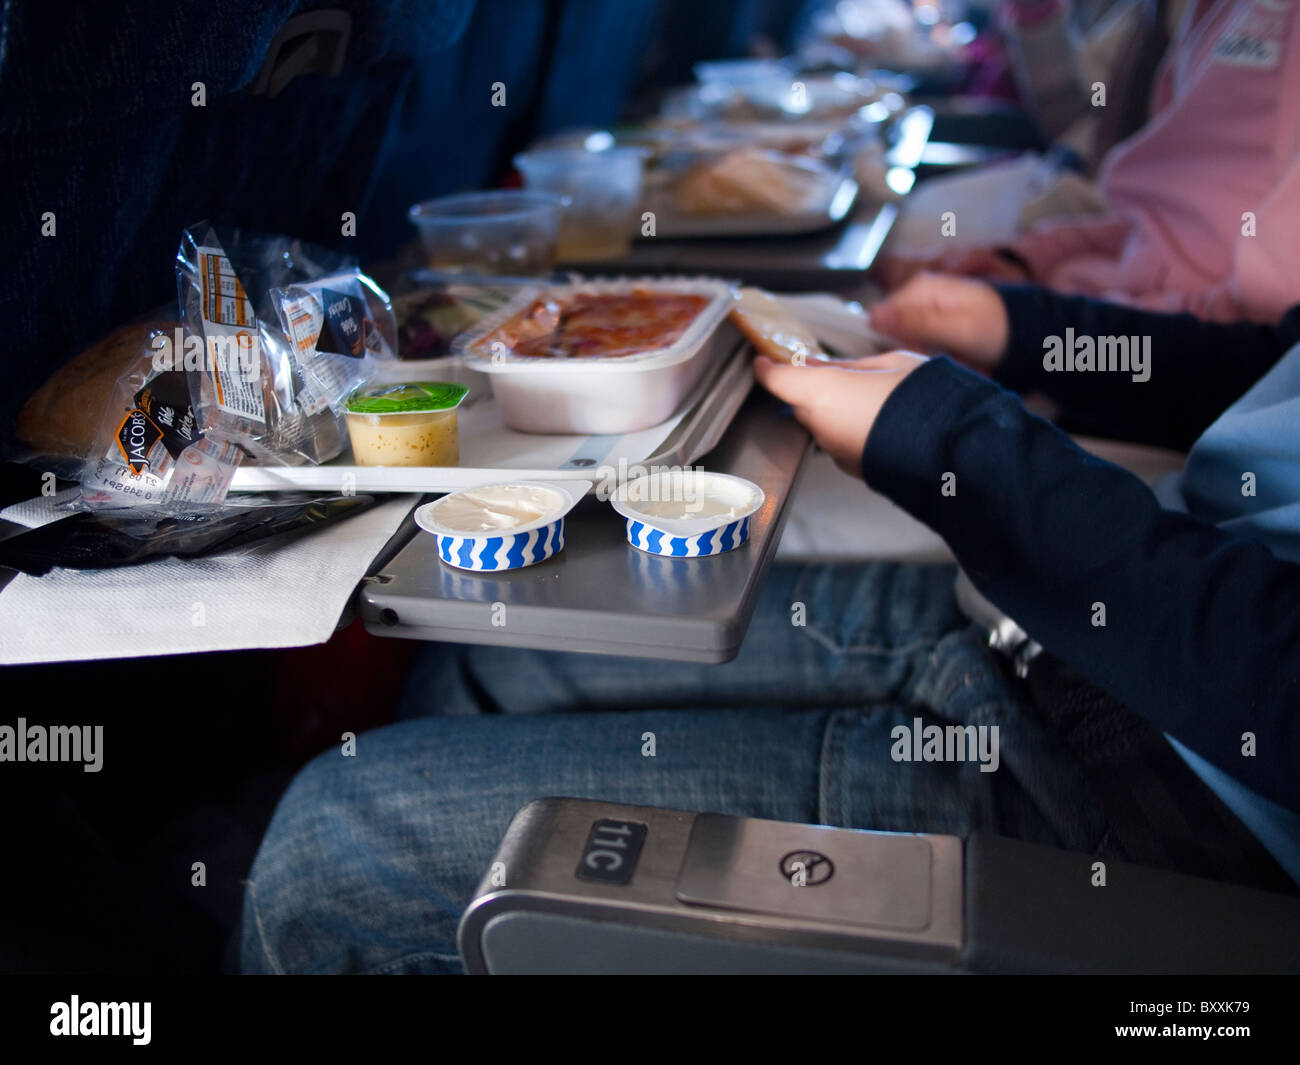 Aeroplane Meals Being Eaten on Board a Flight Stock Photo